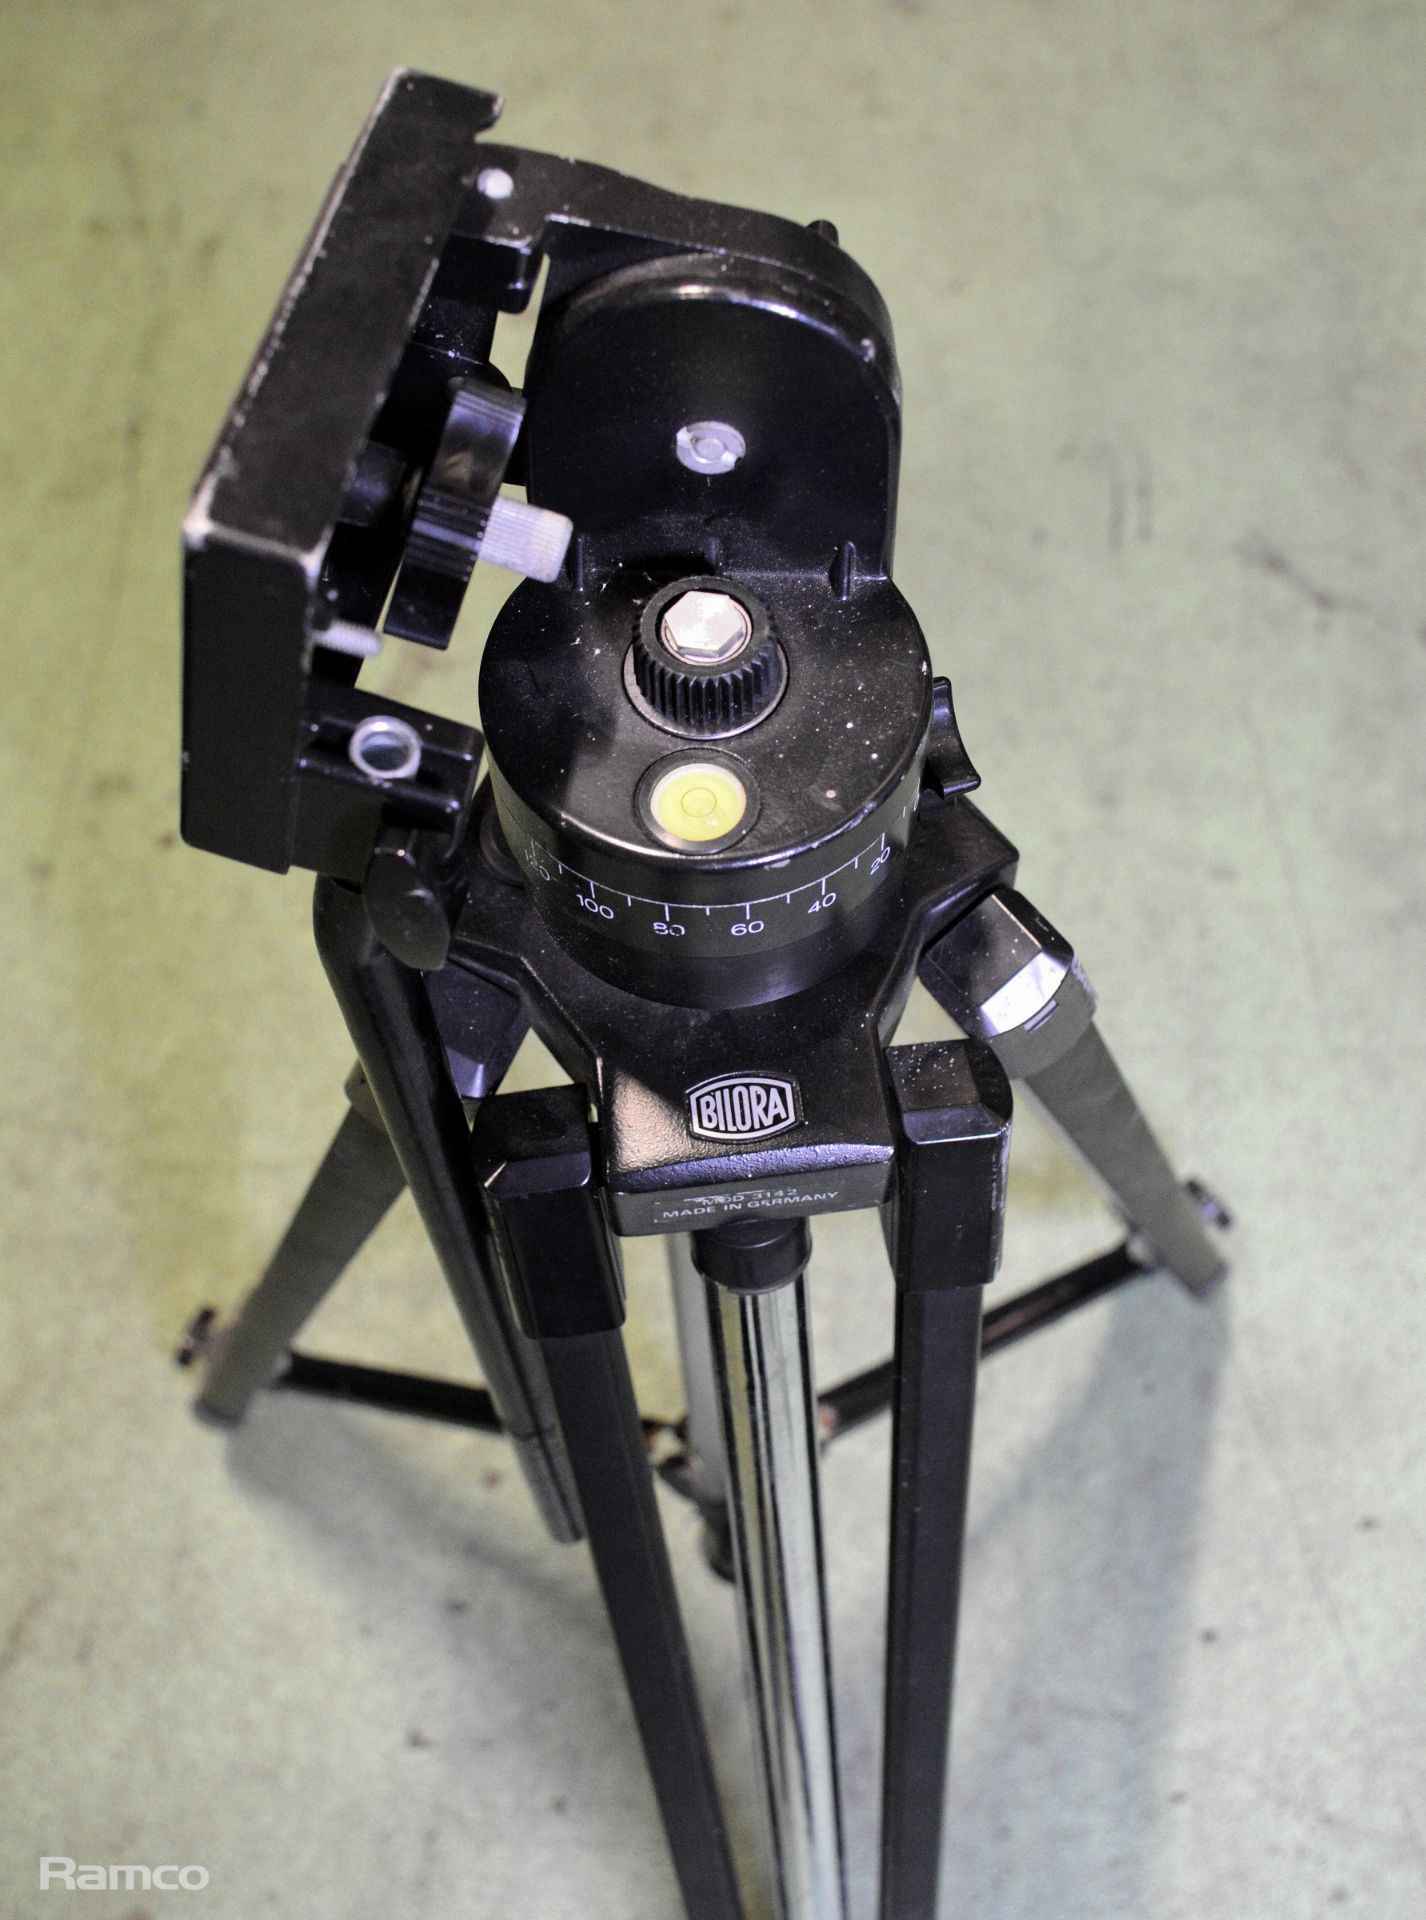 Bilora 3412 Camera Tripod with 1462 fluid effect head unit - Image 2 of 3